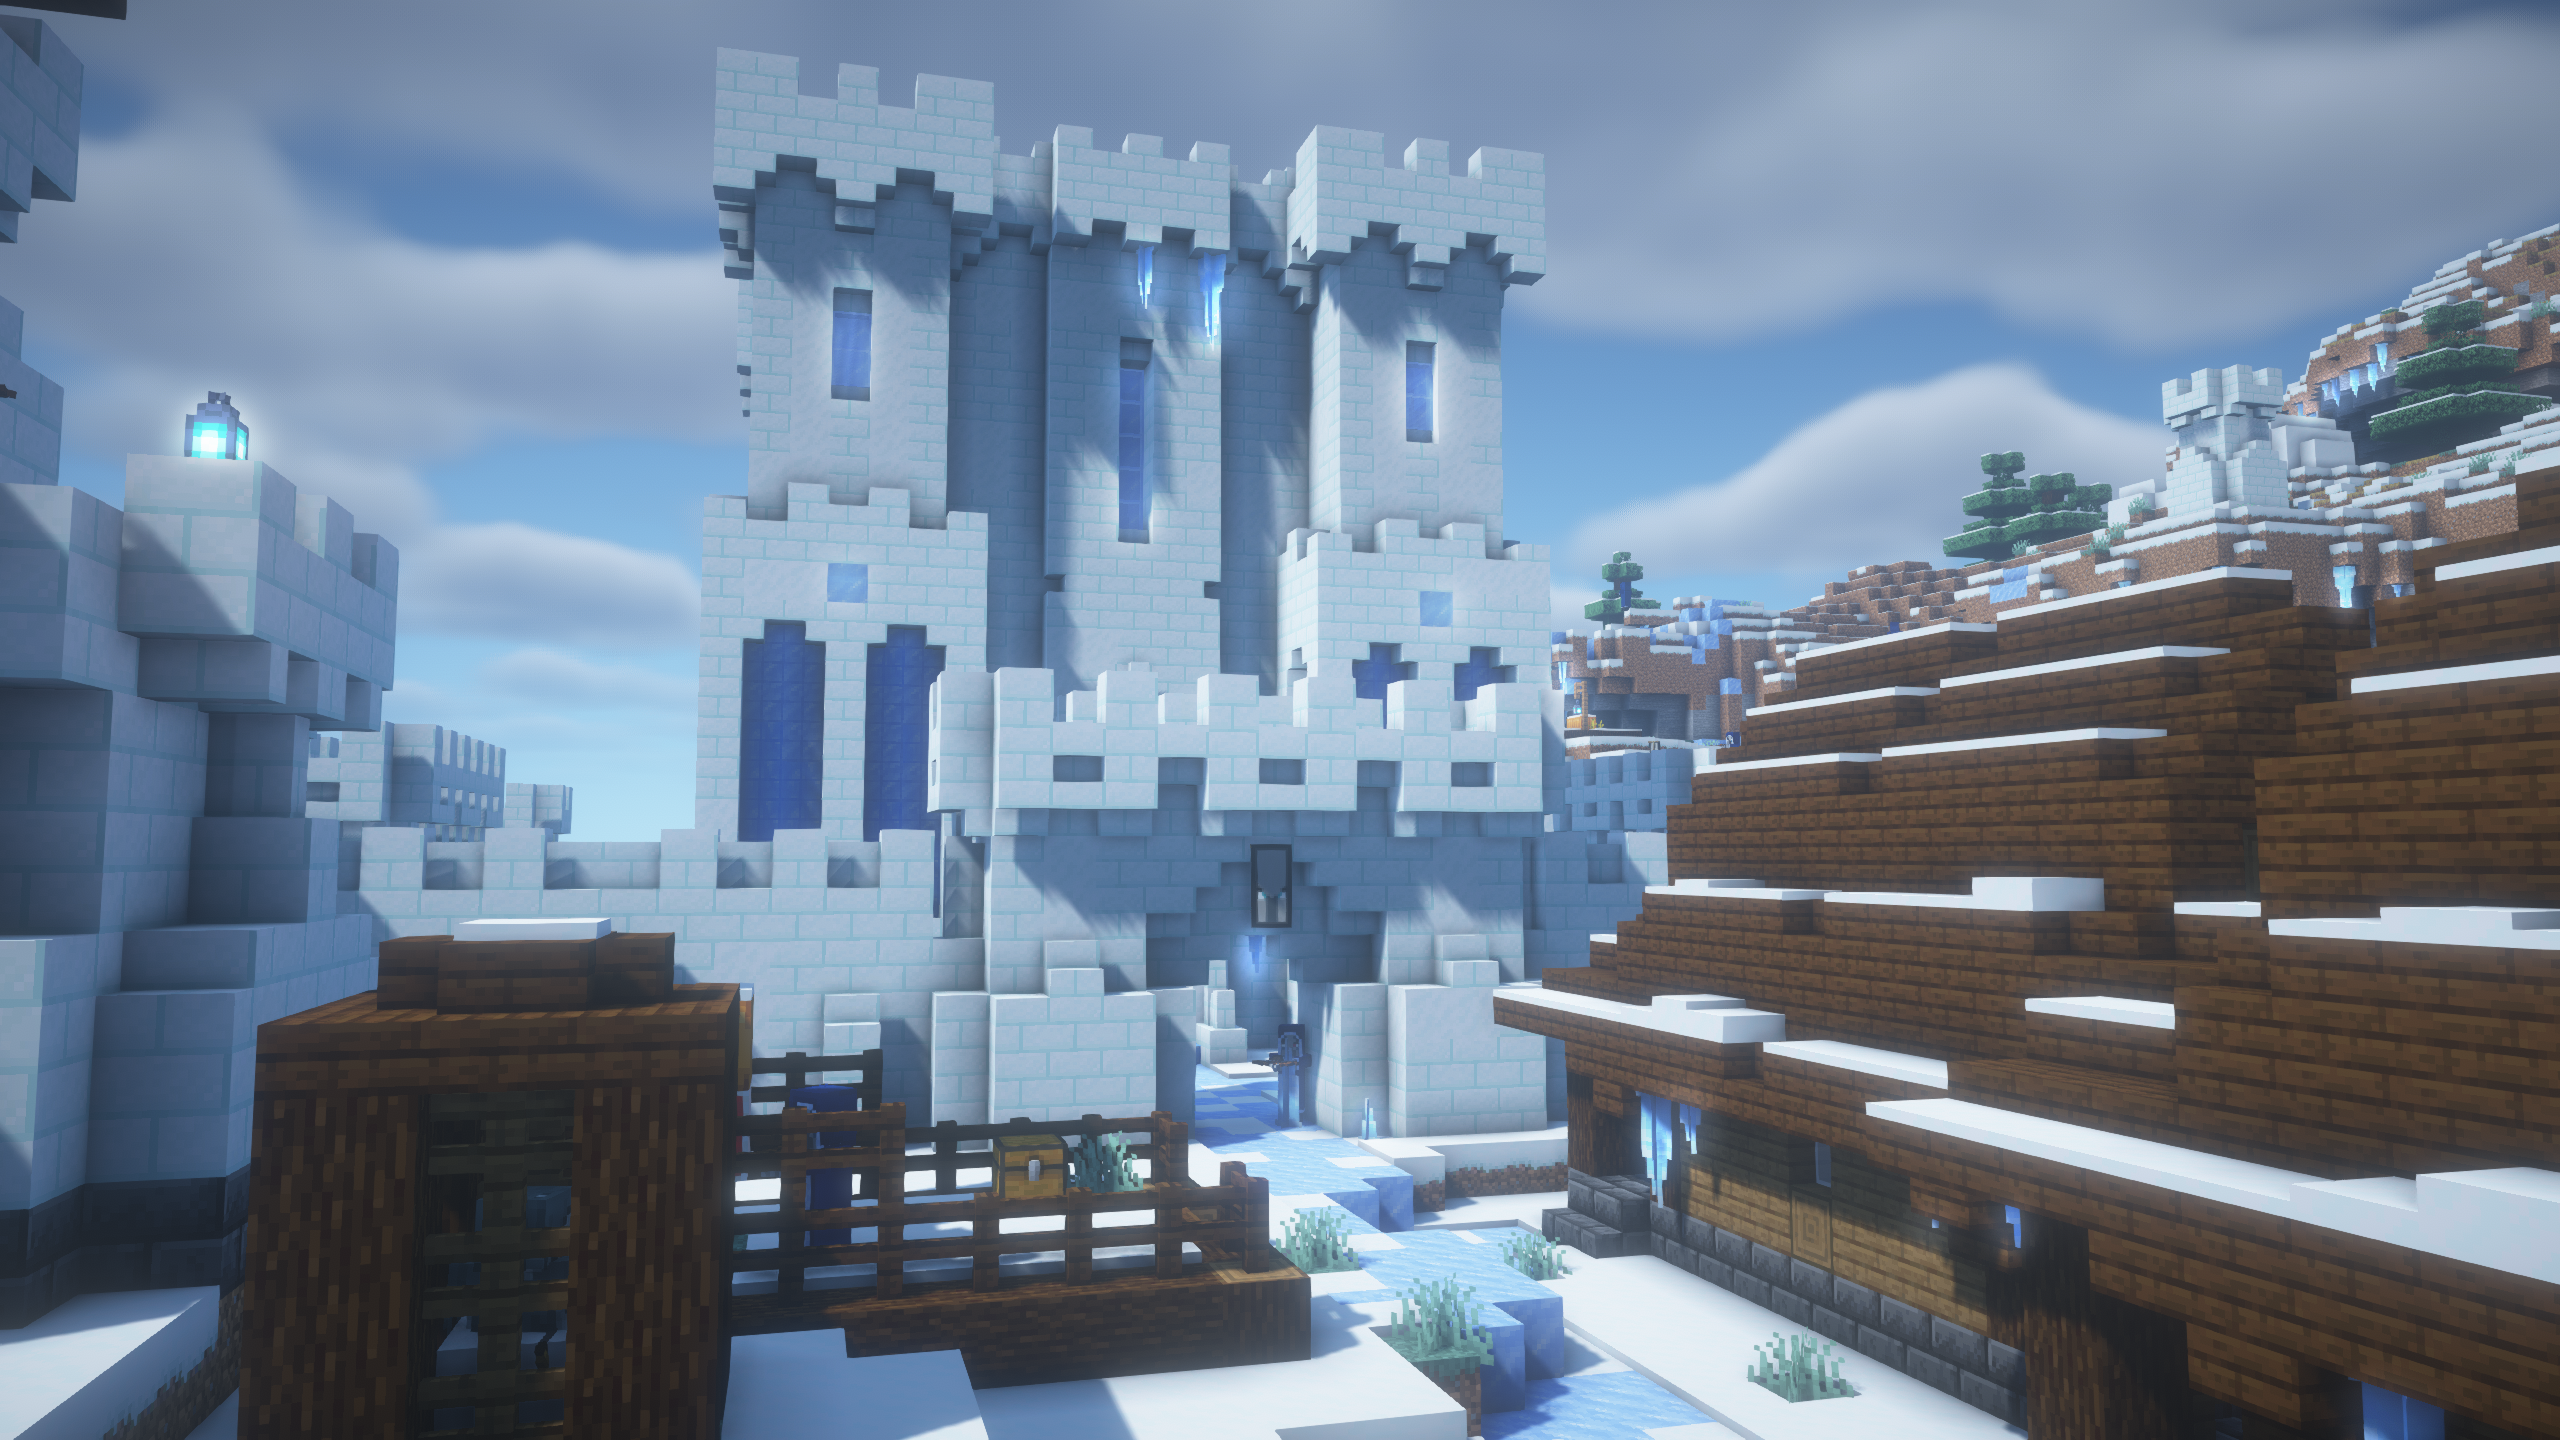 The Frostologer Castle